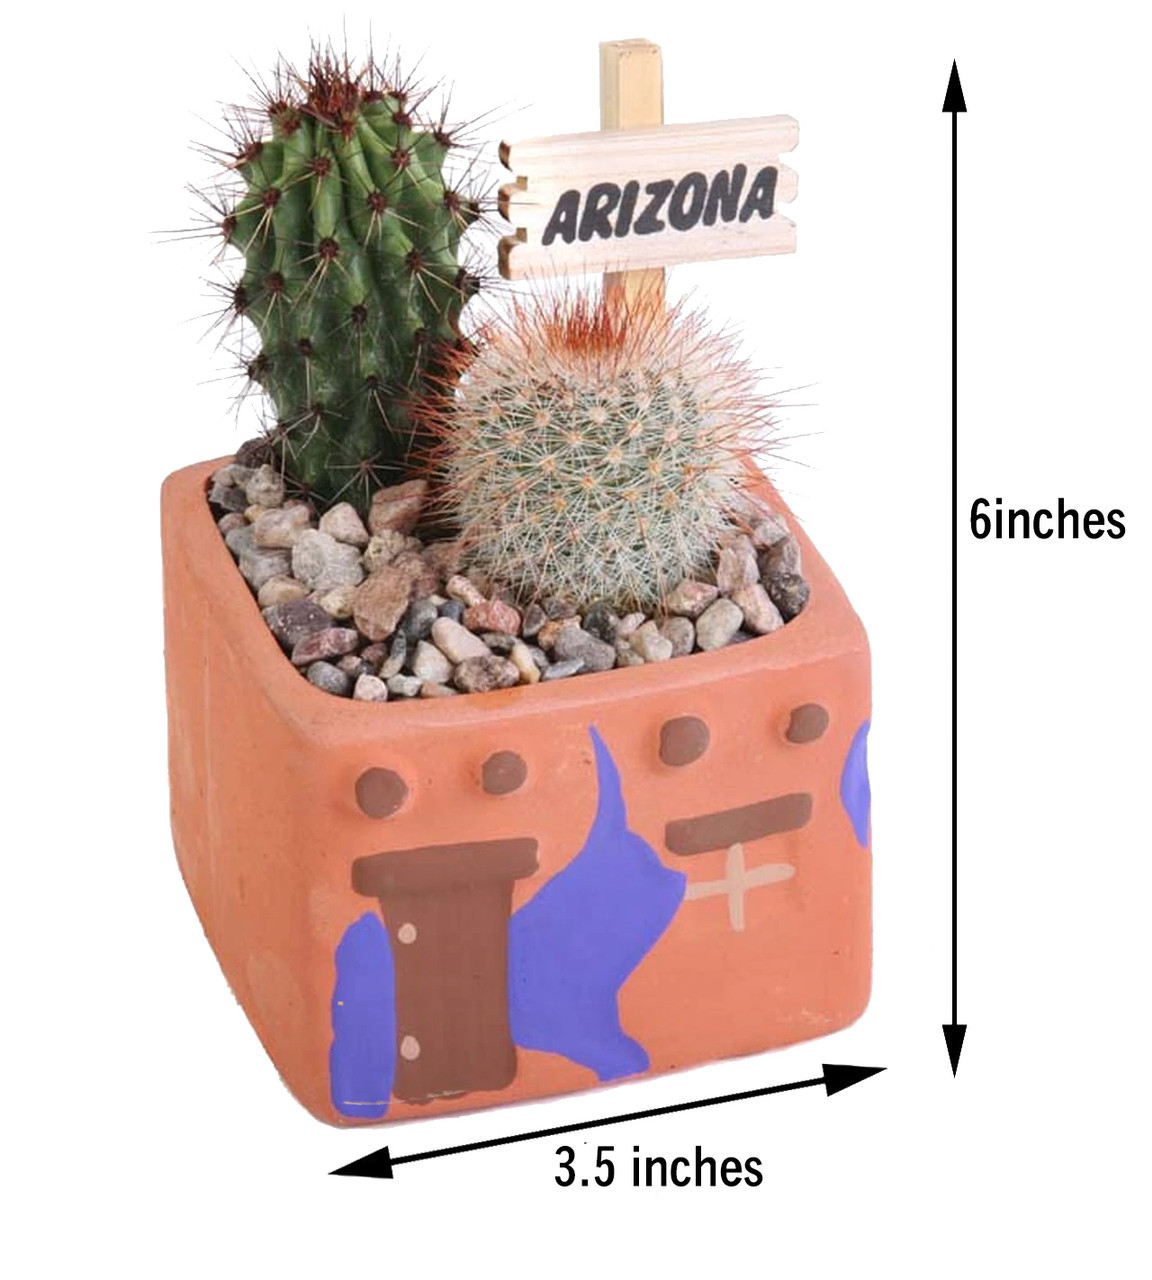 Adobe Cactus Planters - 3.5 inch Arizona Gifts